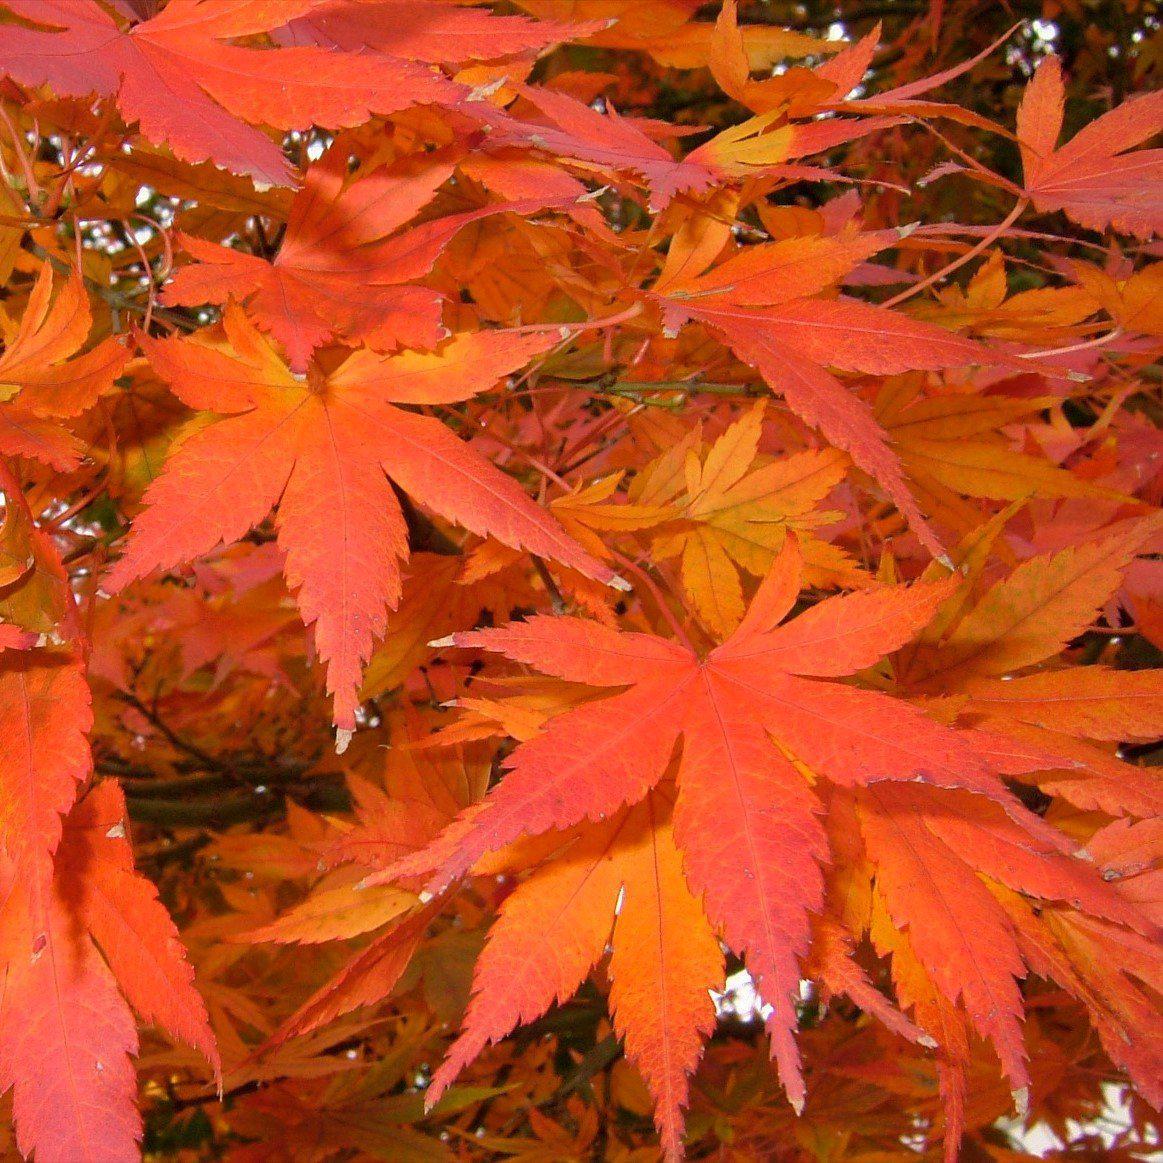 Acer palmatum 'Glowing Embers' ~ Glowing Embers Japanese Maple